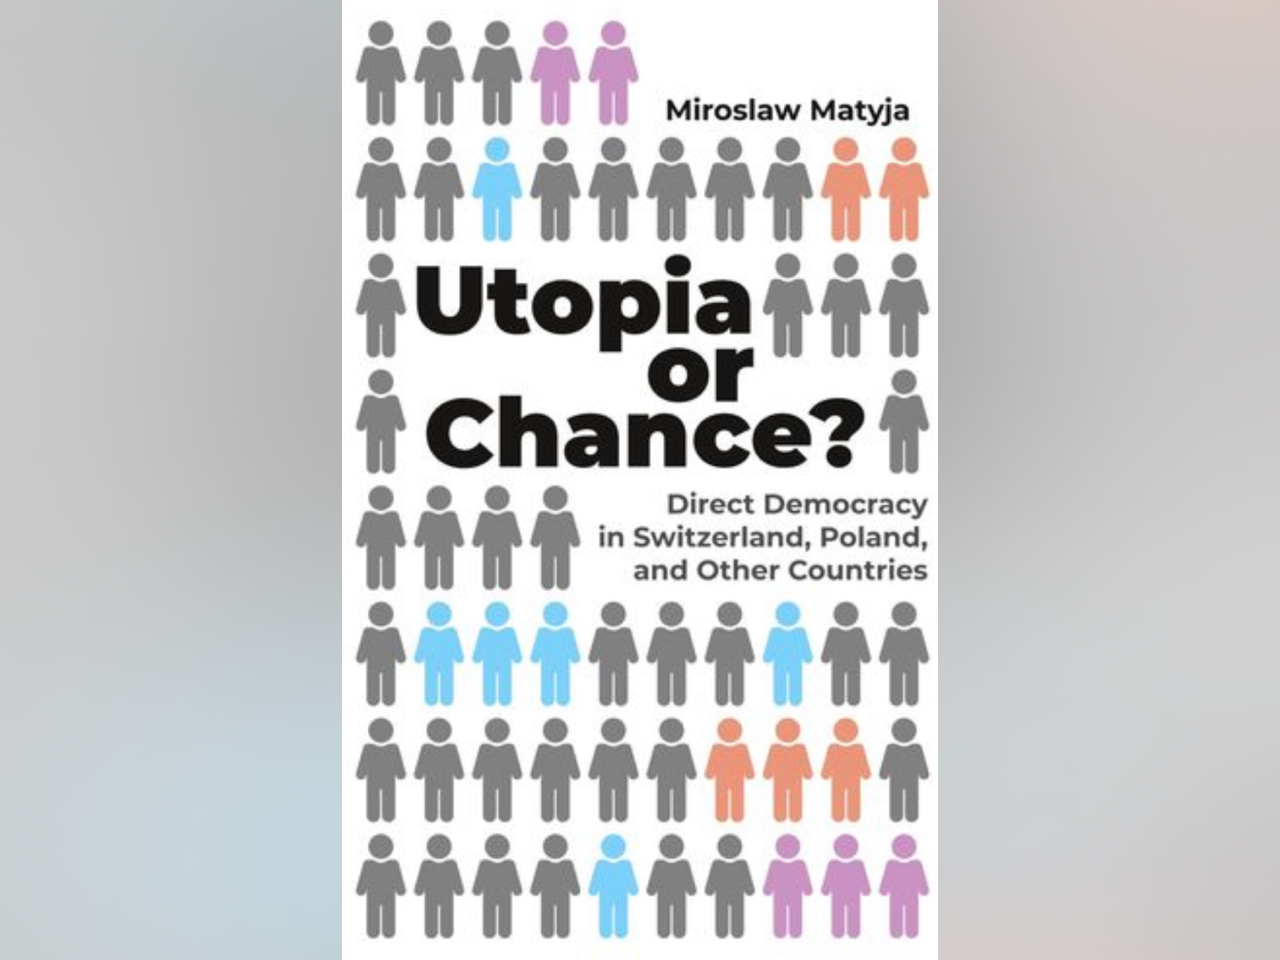 Prof. Matyja: “Utopia or Chance?”